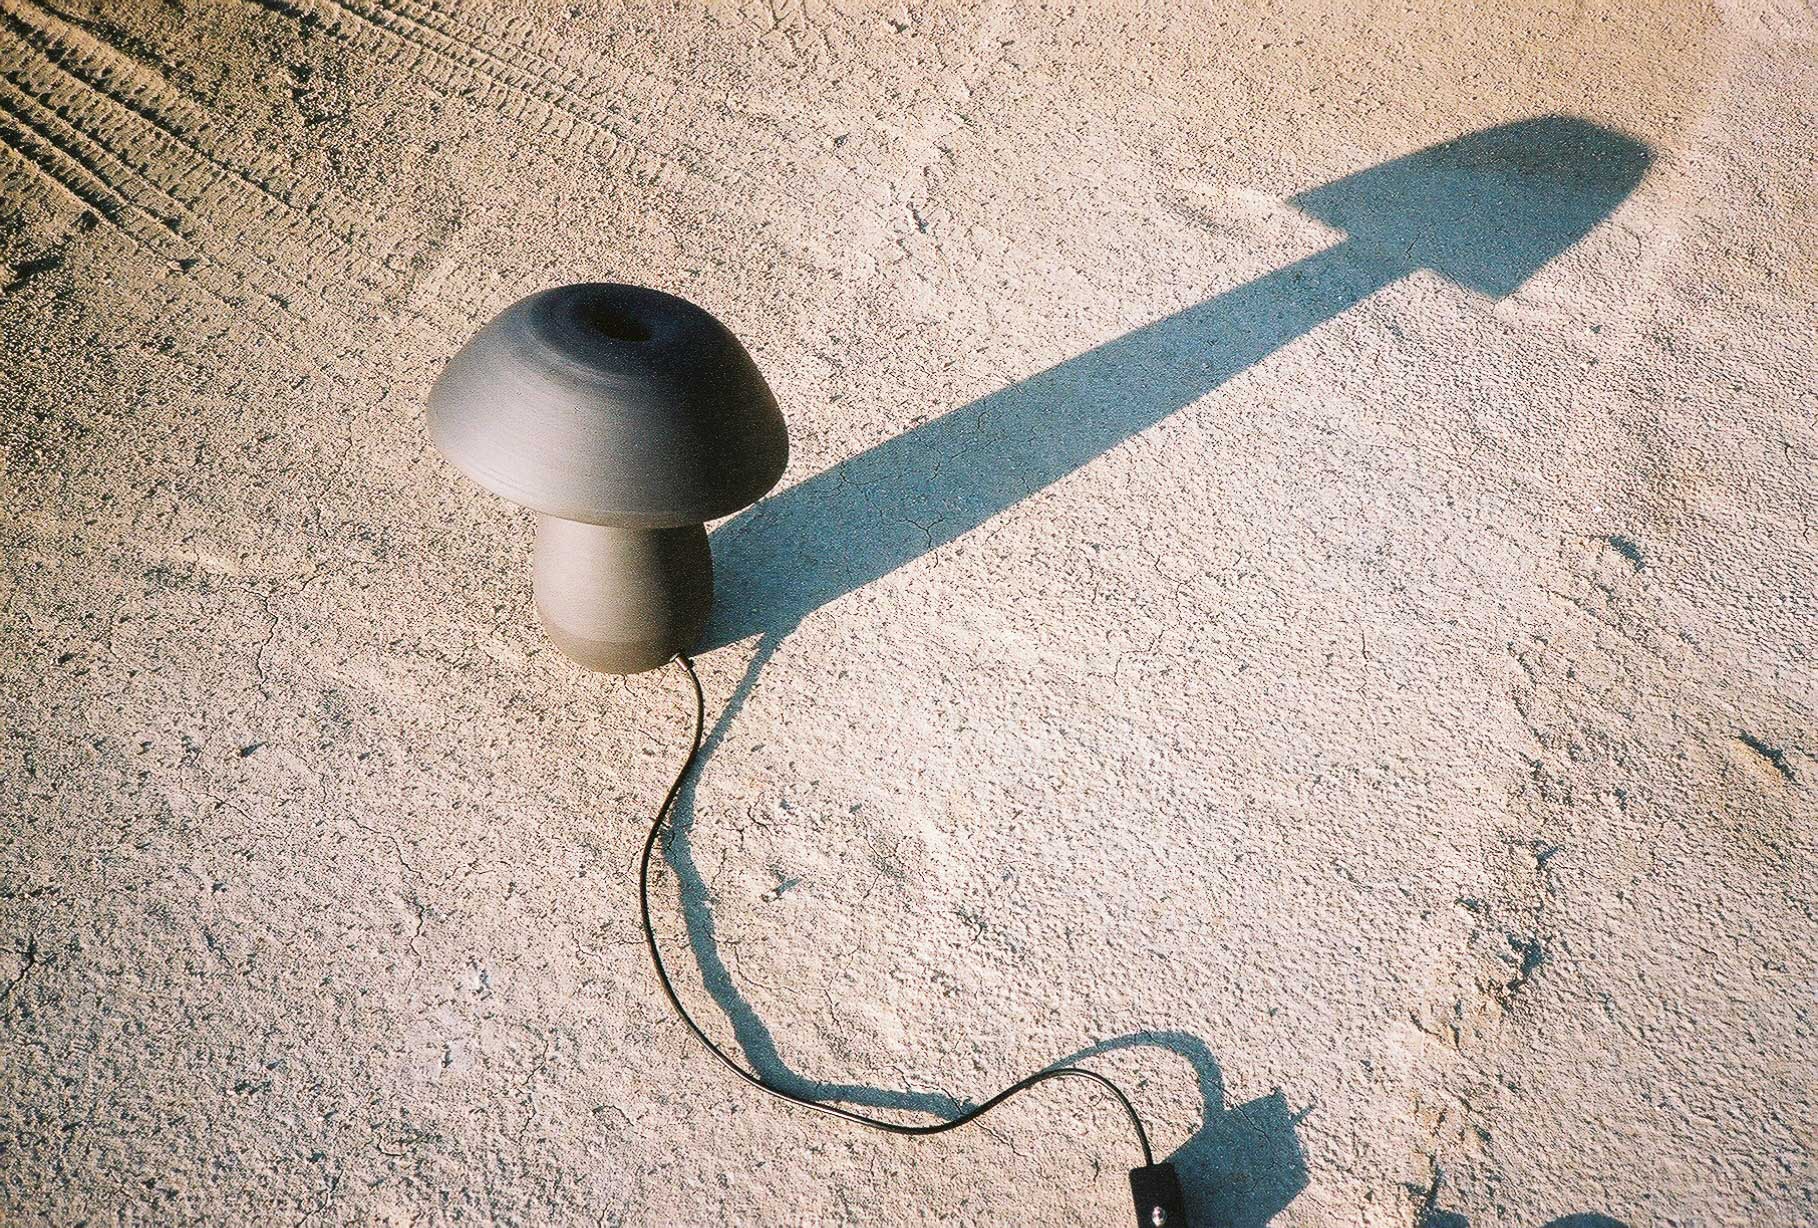 Black Mushroom Lamp shot outside on the ground in the dirt